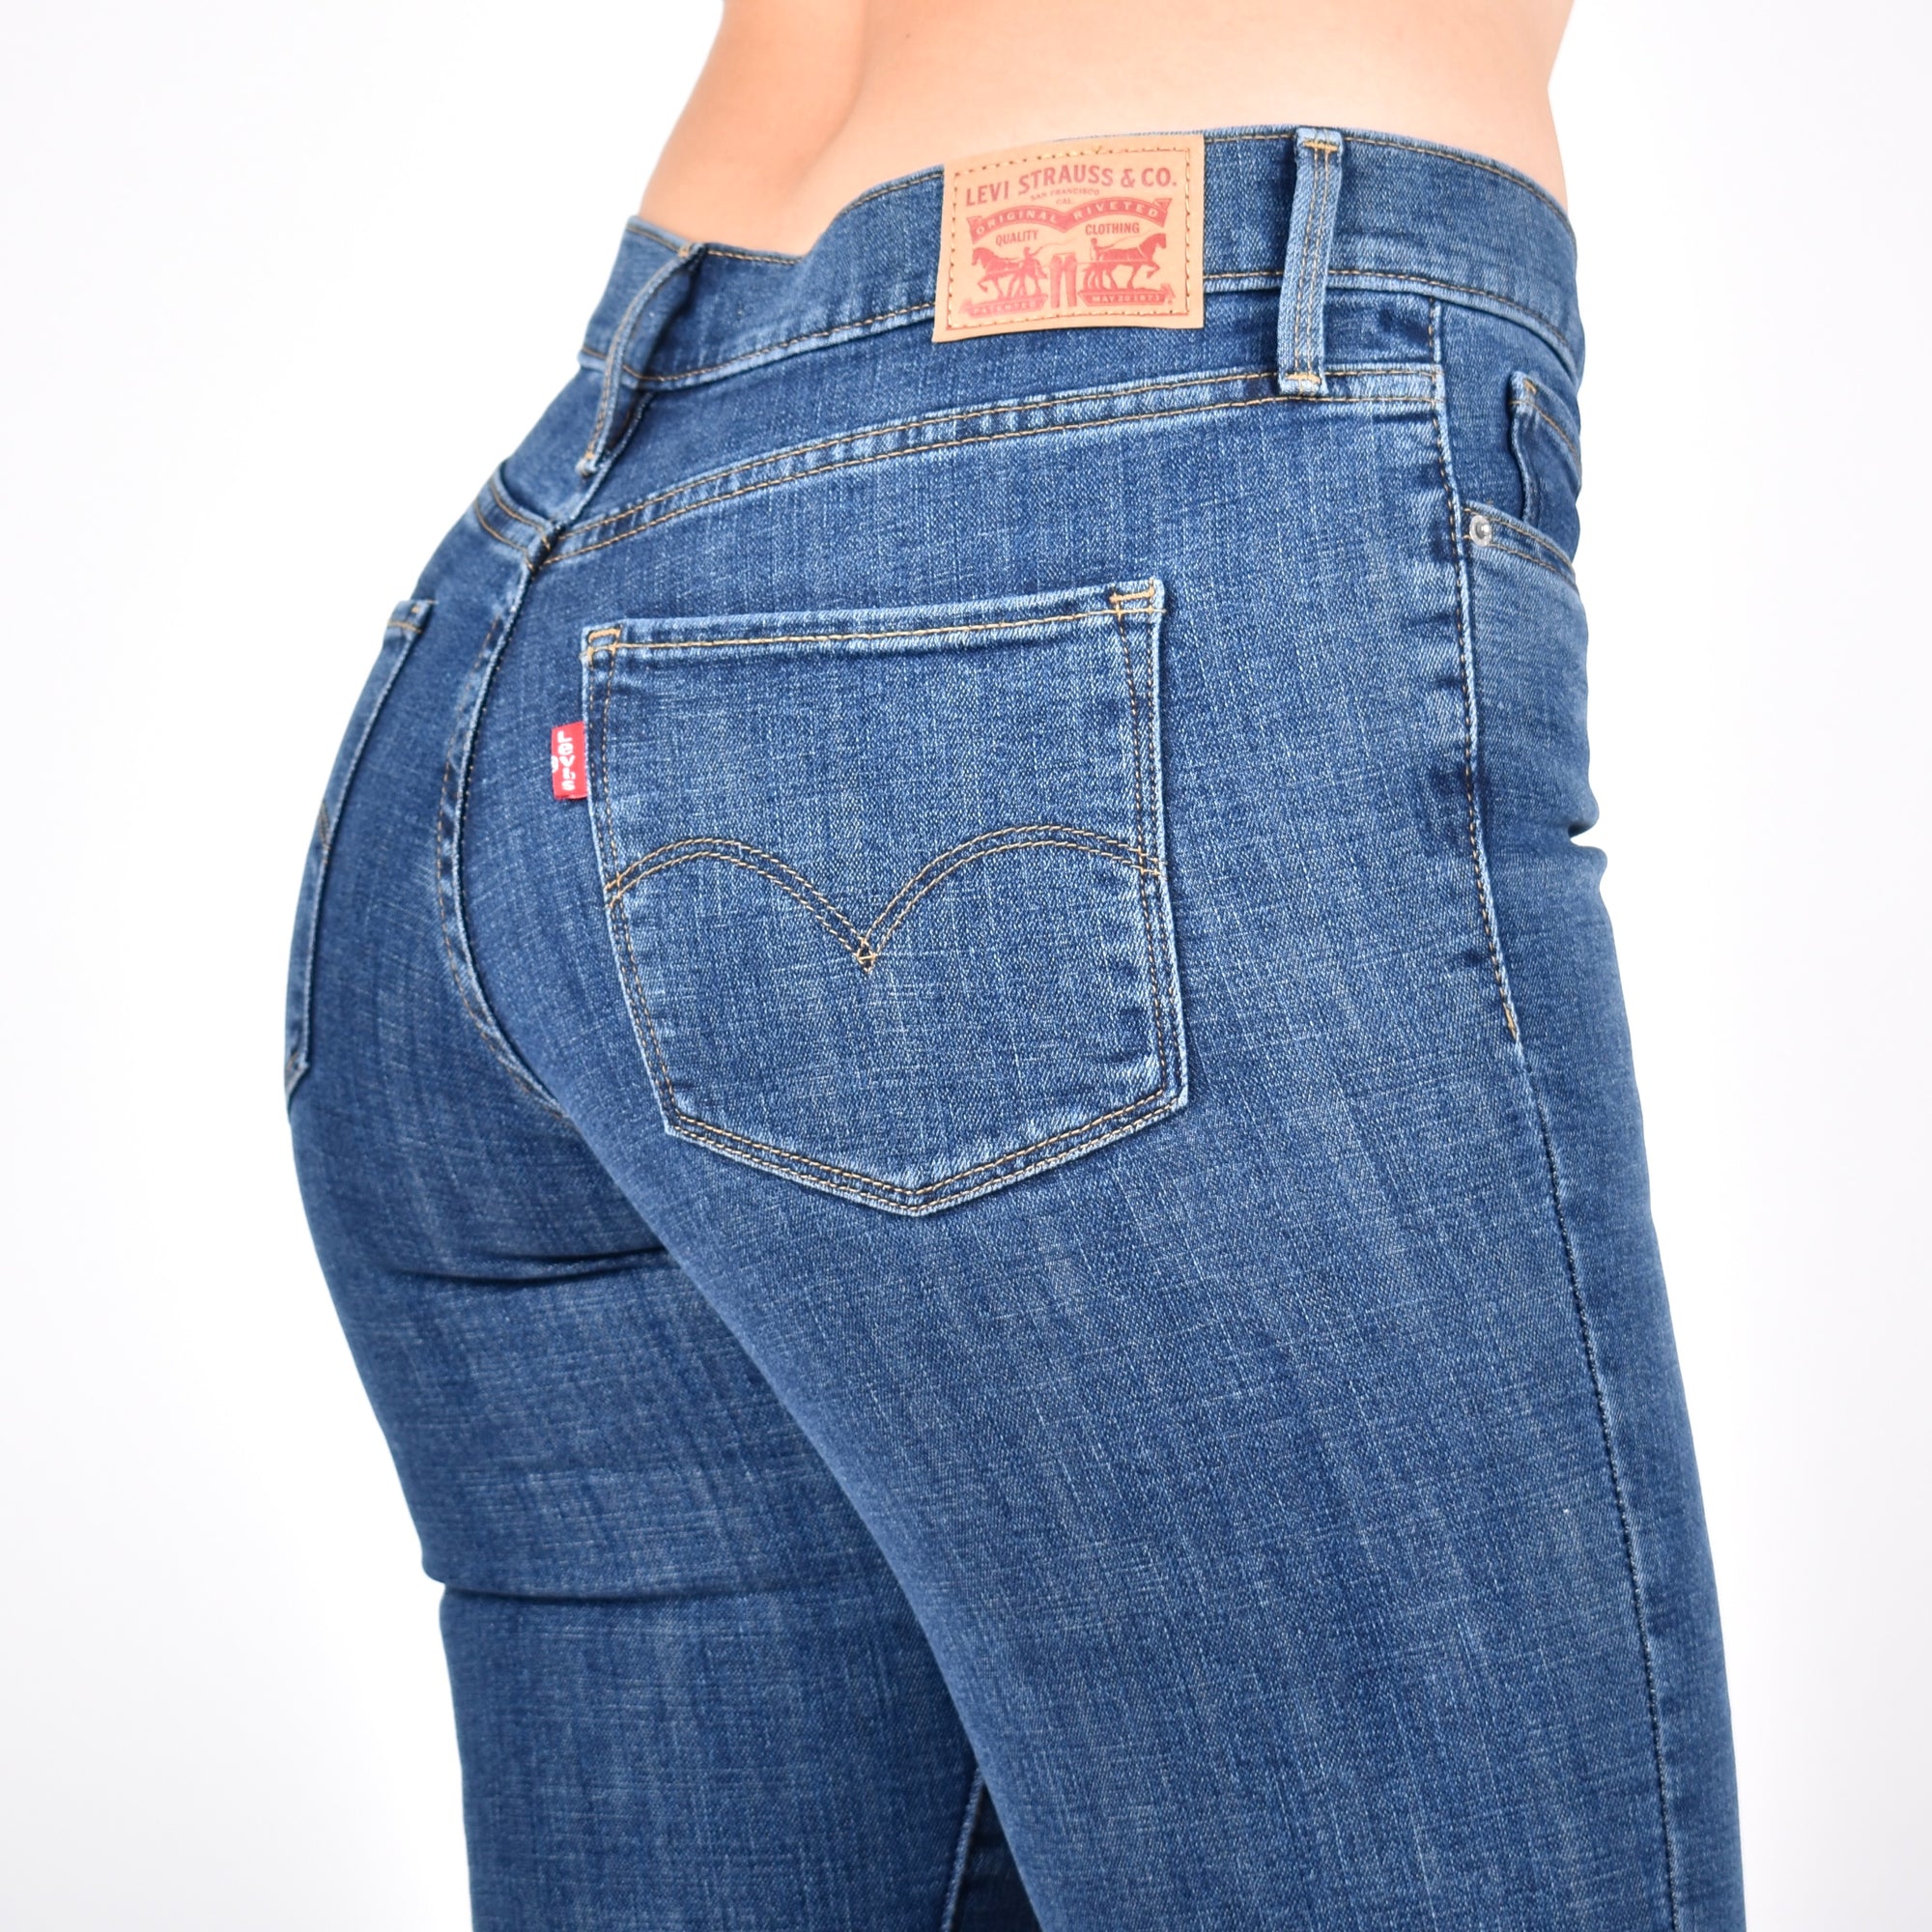  Levi's Jeans clásicos con corte de bota para mujer